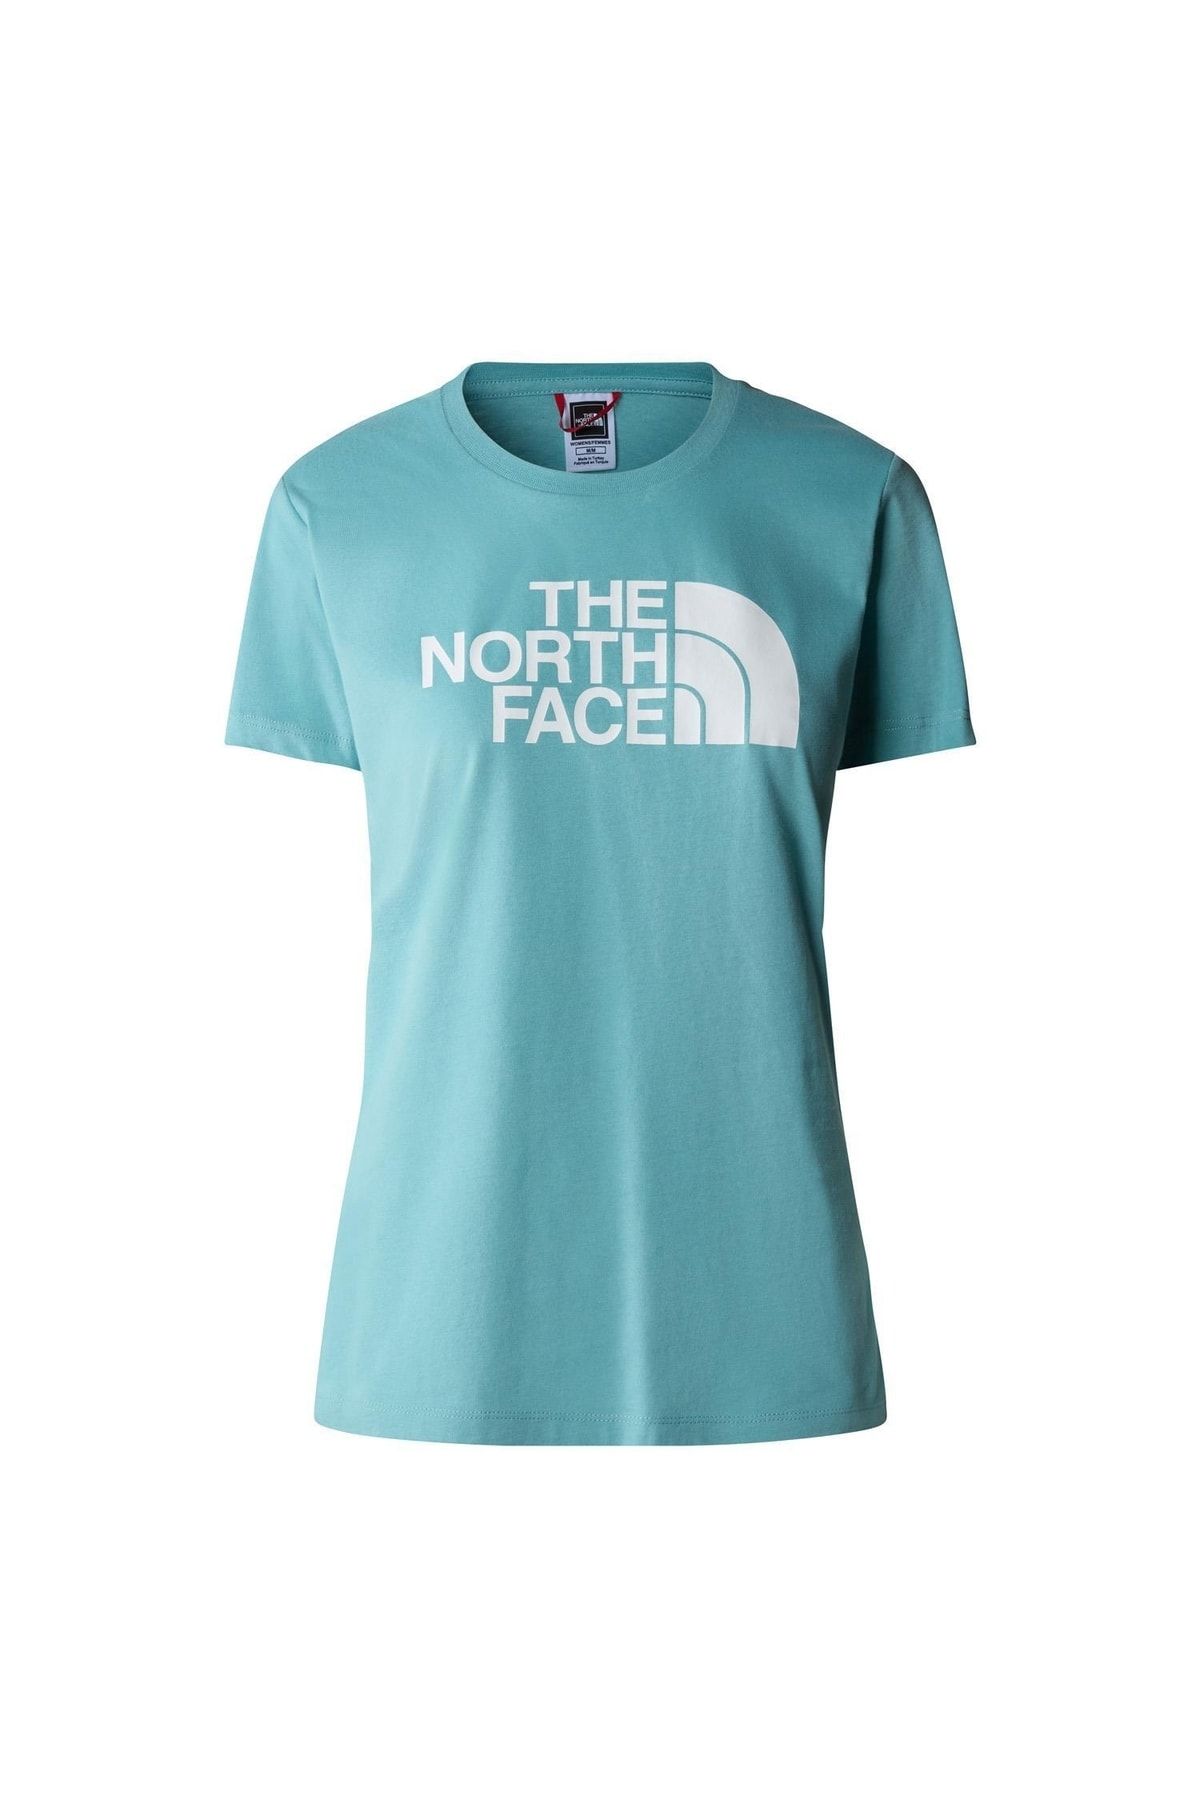 The North Face W Standard S/s Tee - Eu Kadın T-shirt Nf0a7zgglv21